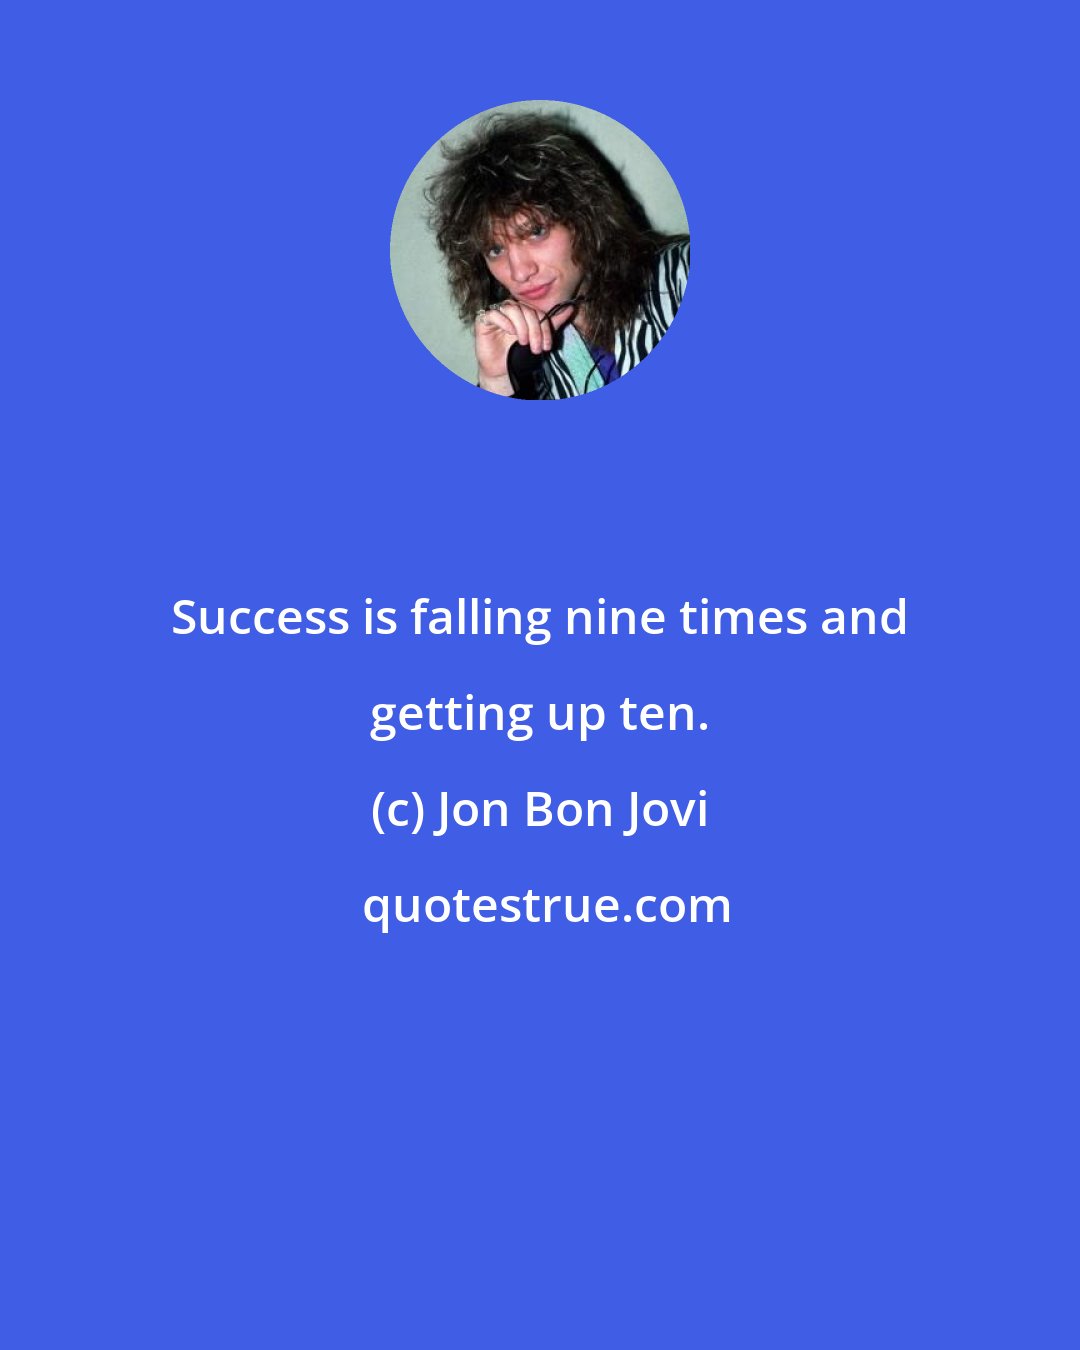 Jon Bon Jovi: Success is falling nine times and getting up ten.